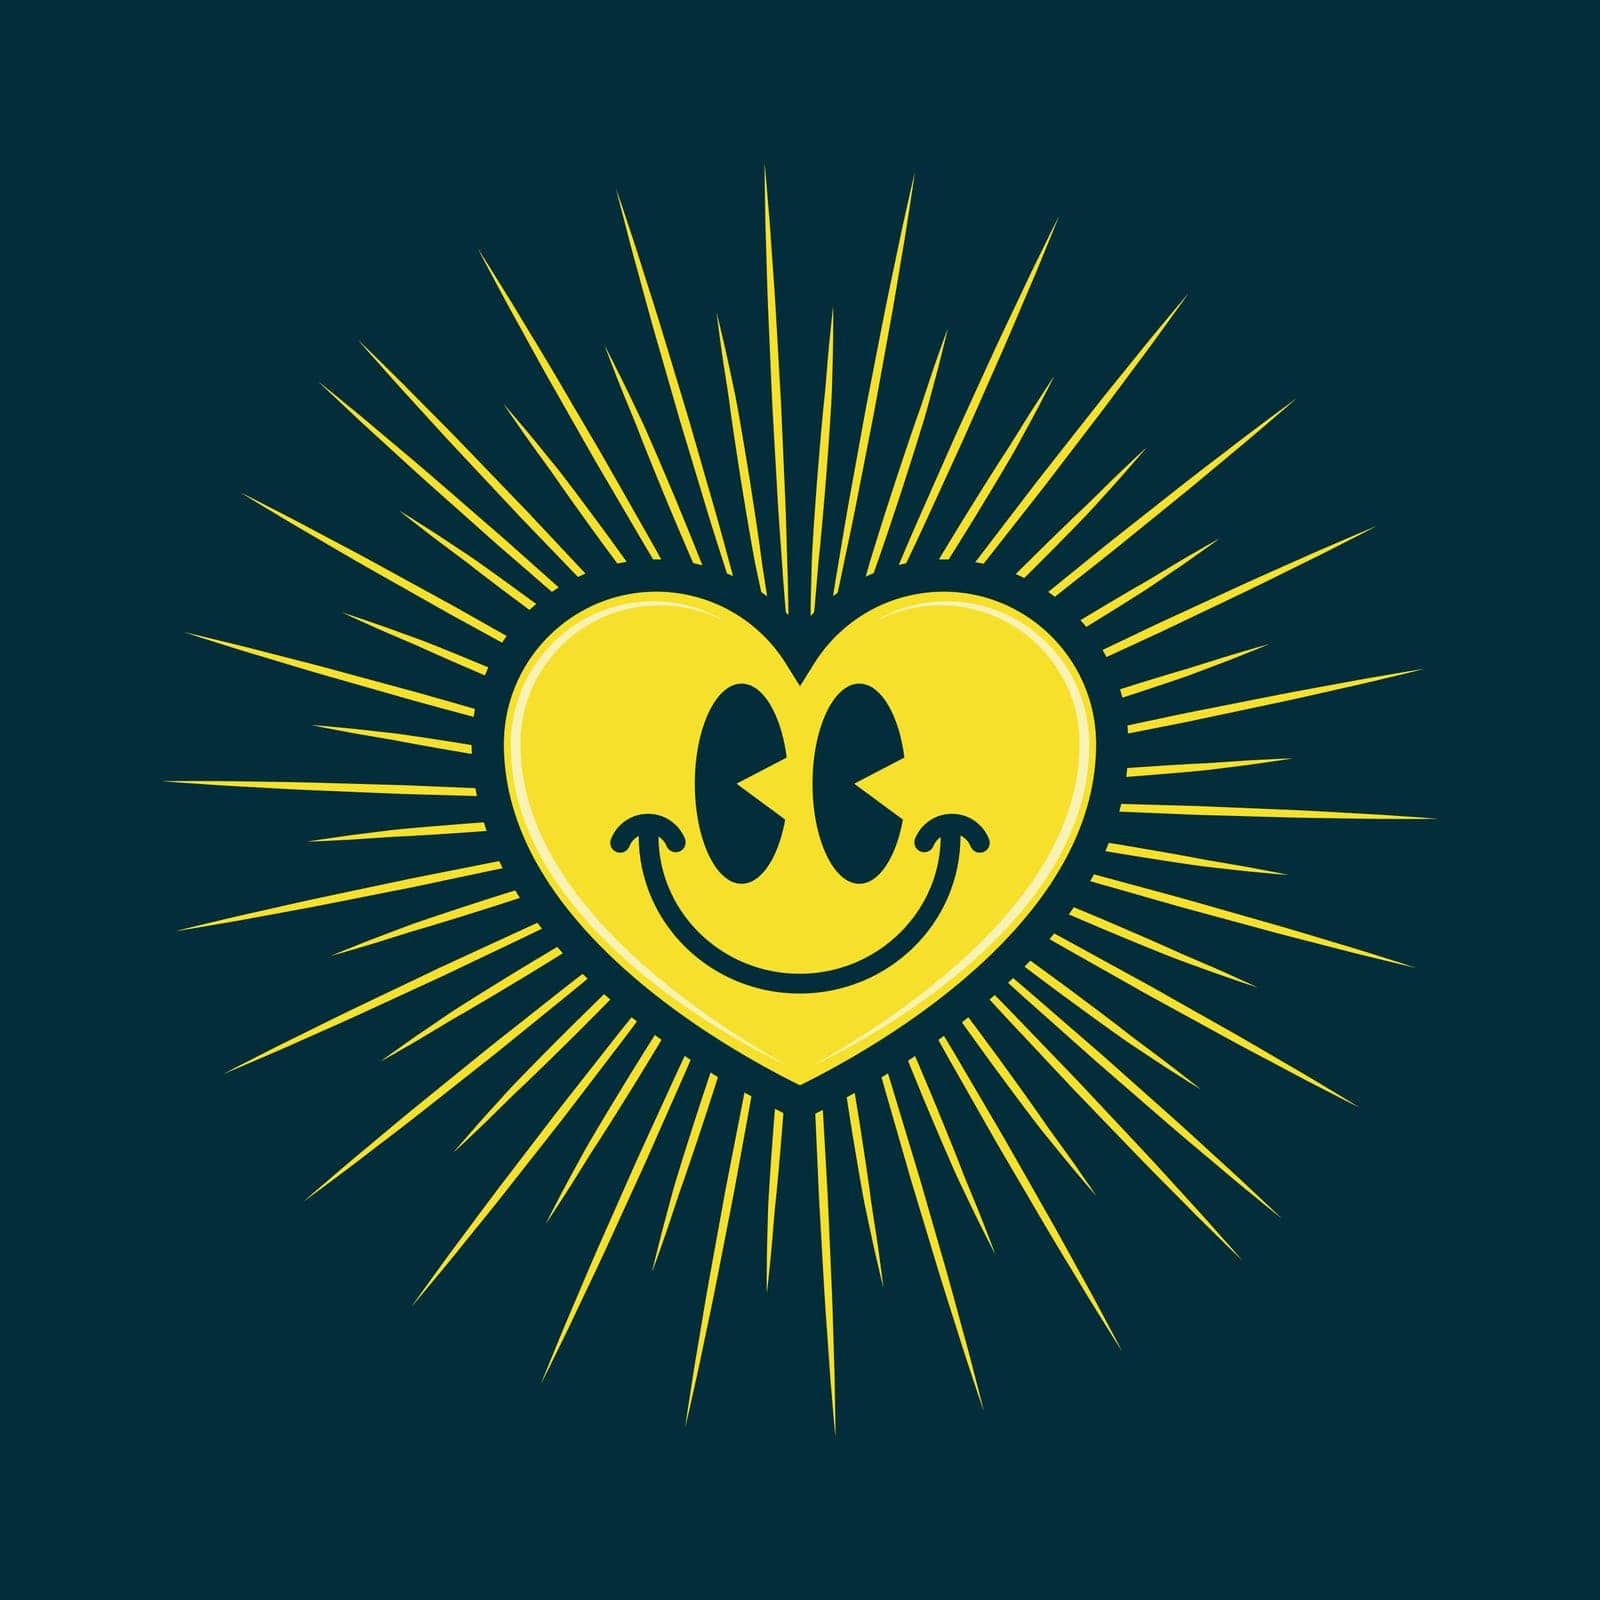 Happiness heart smiling emoji by Menyoen